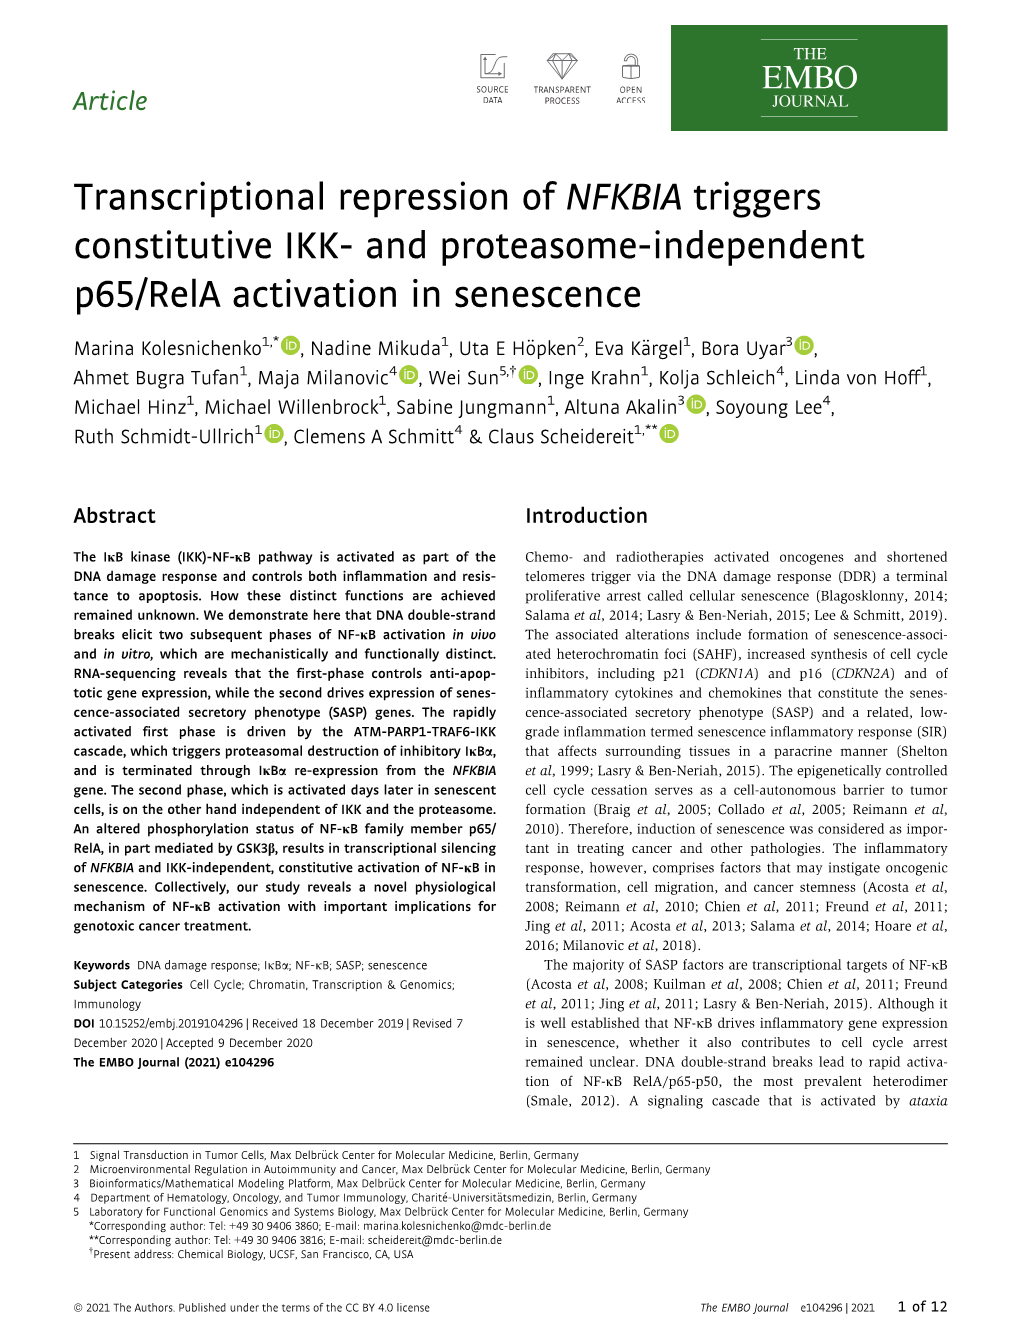 Transcriptional Repression of NFKBIA Triggers Constitutive IKK&#X02010